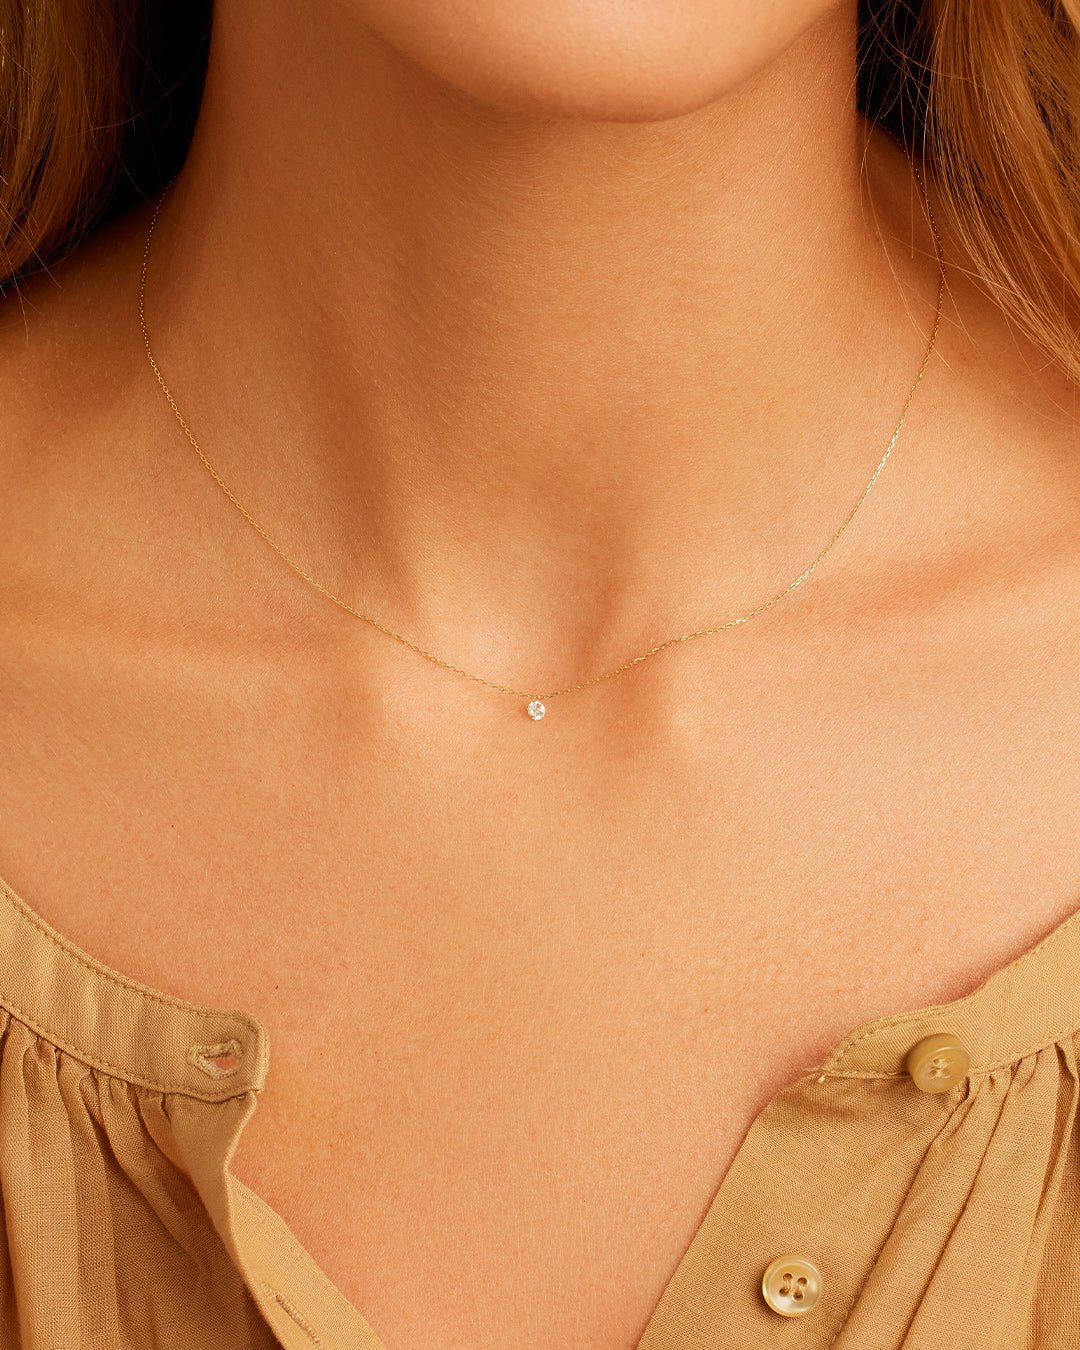 Diamond Necklace Designs  Buy Diamond Necklace Set Online at Best